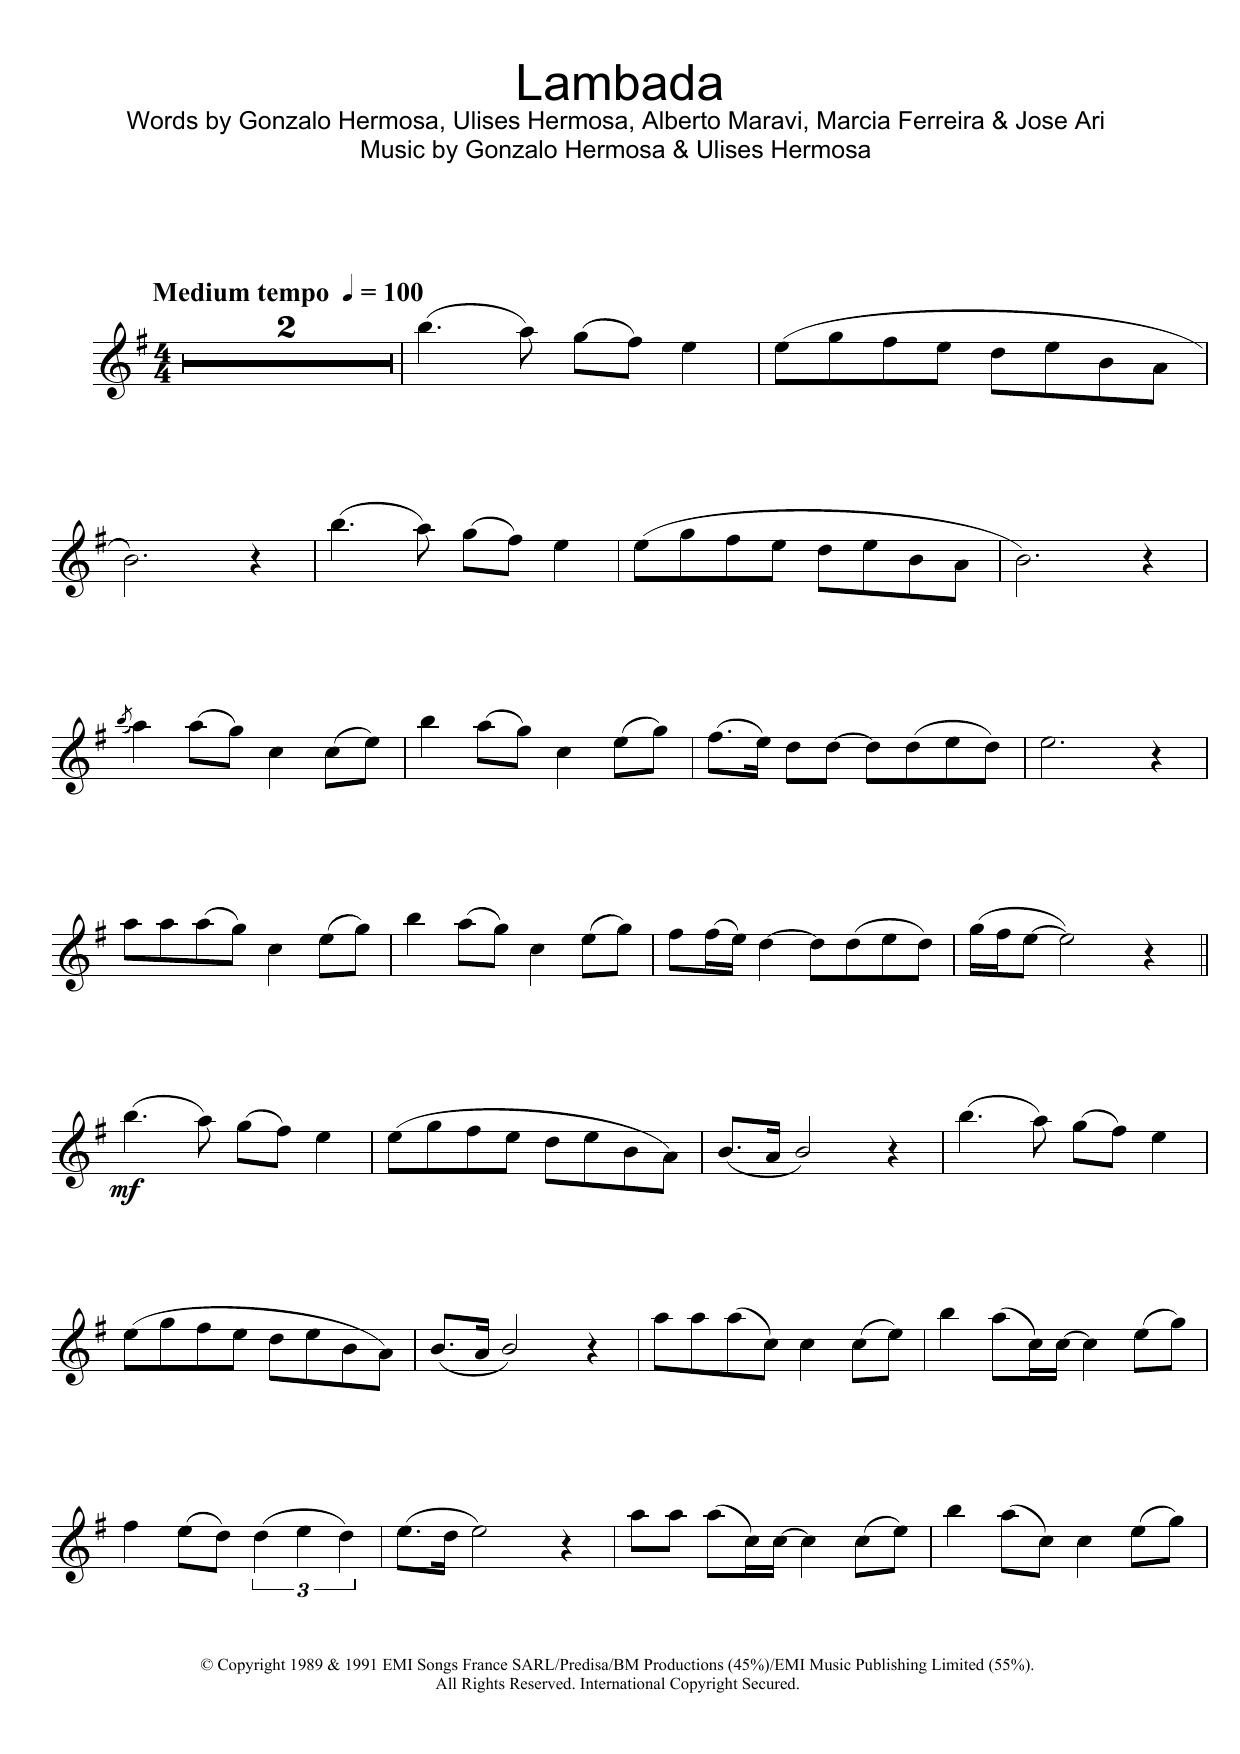 Kaoma Lambada Sheet Music Notes & Chords for Flute - Download or Print PDF